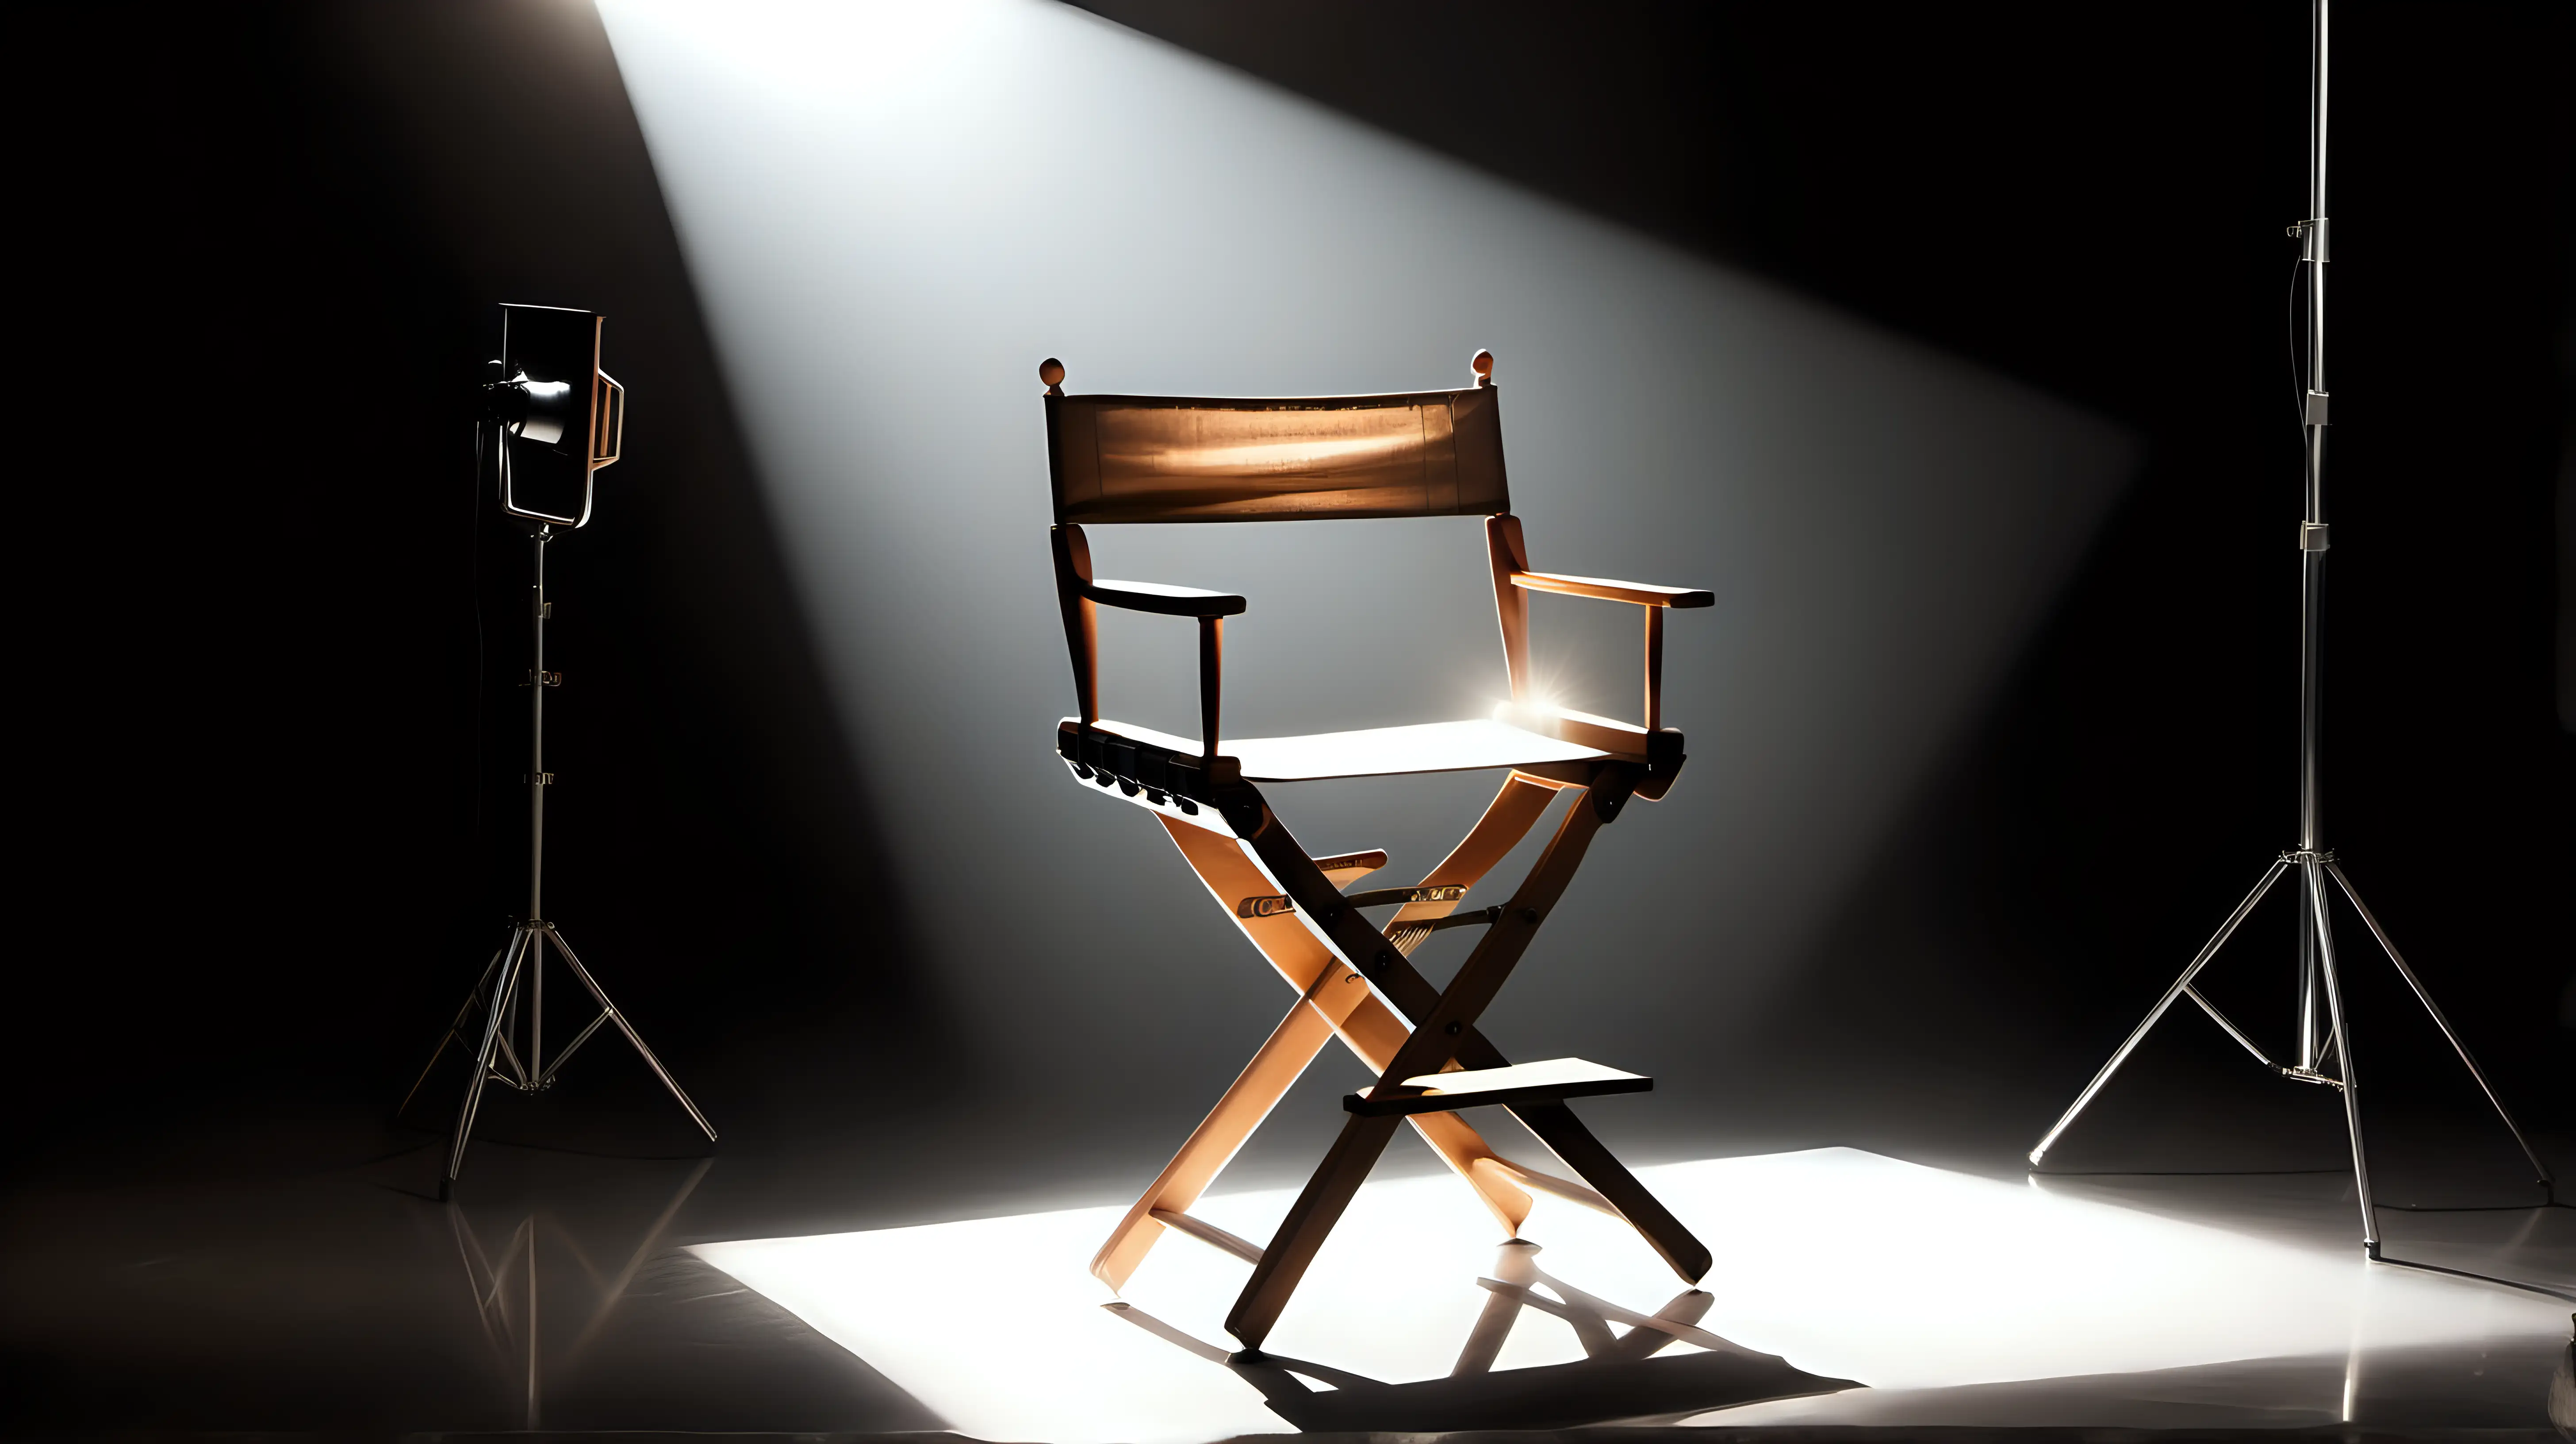 Directors Chair in Spotlight at Studio Casting Call